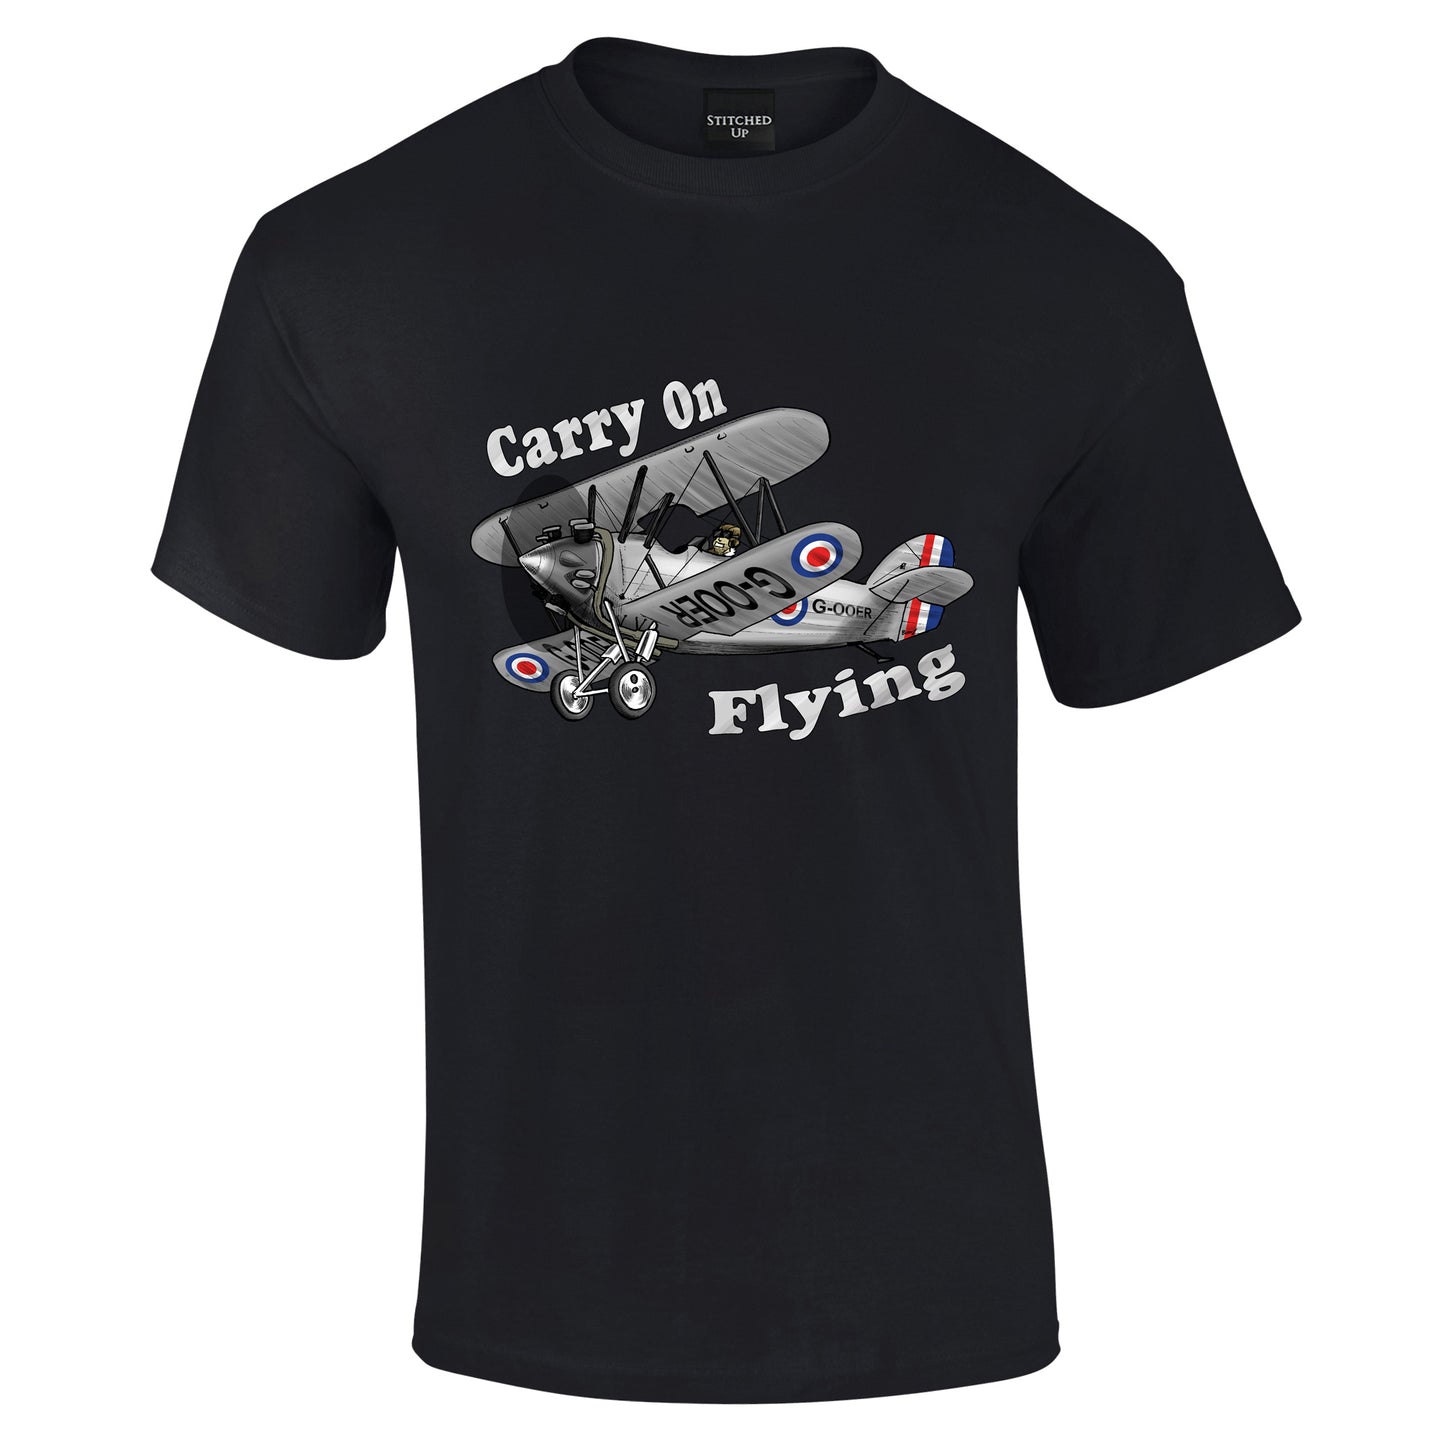 Carry on Flying Bi Plane T-Shirt